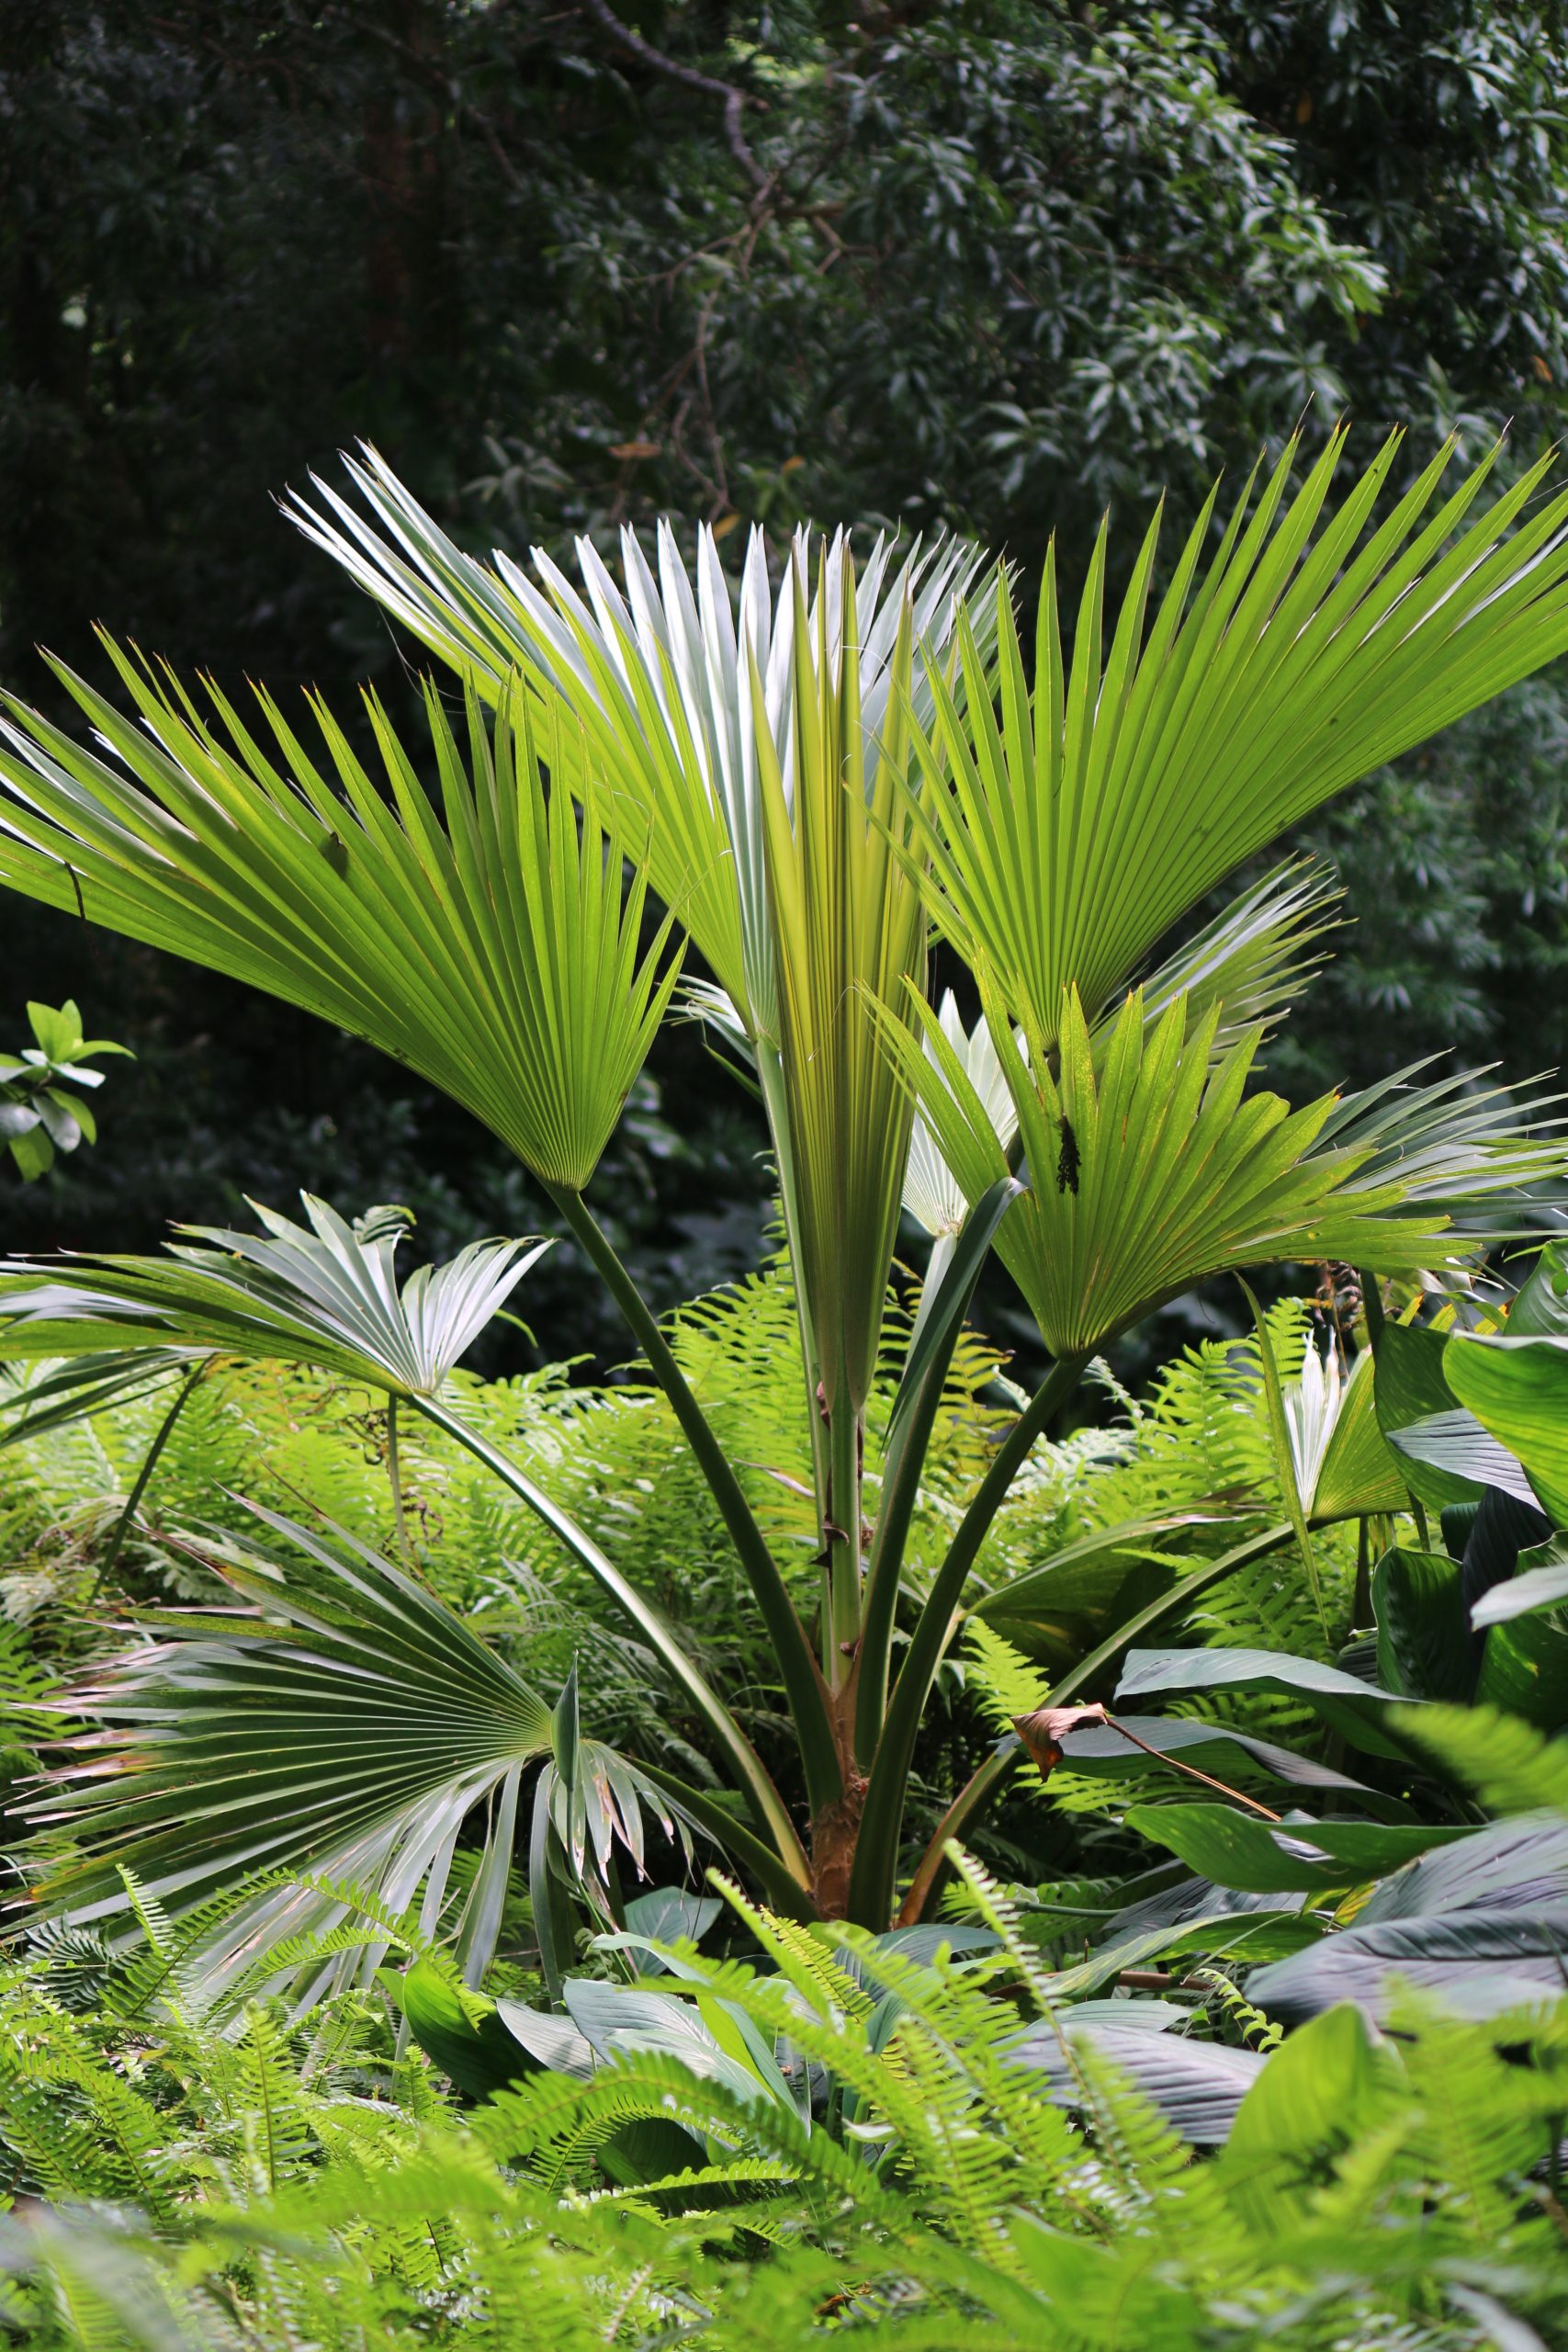 Native Hawaiian palm